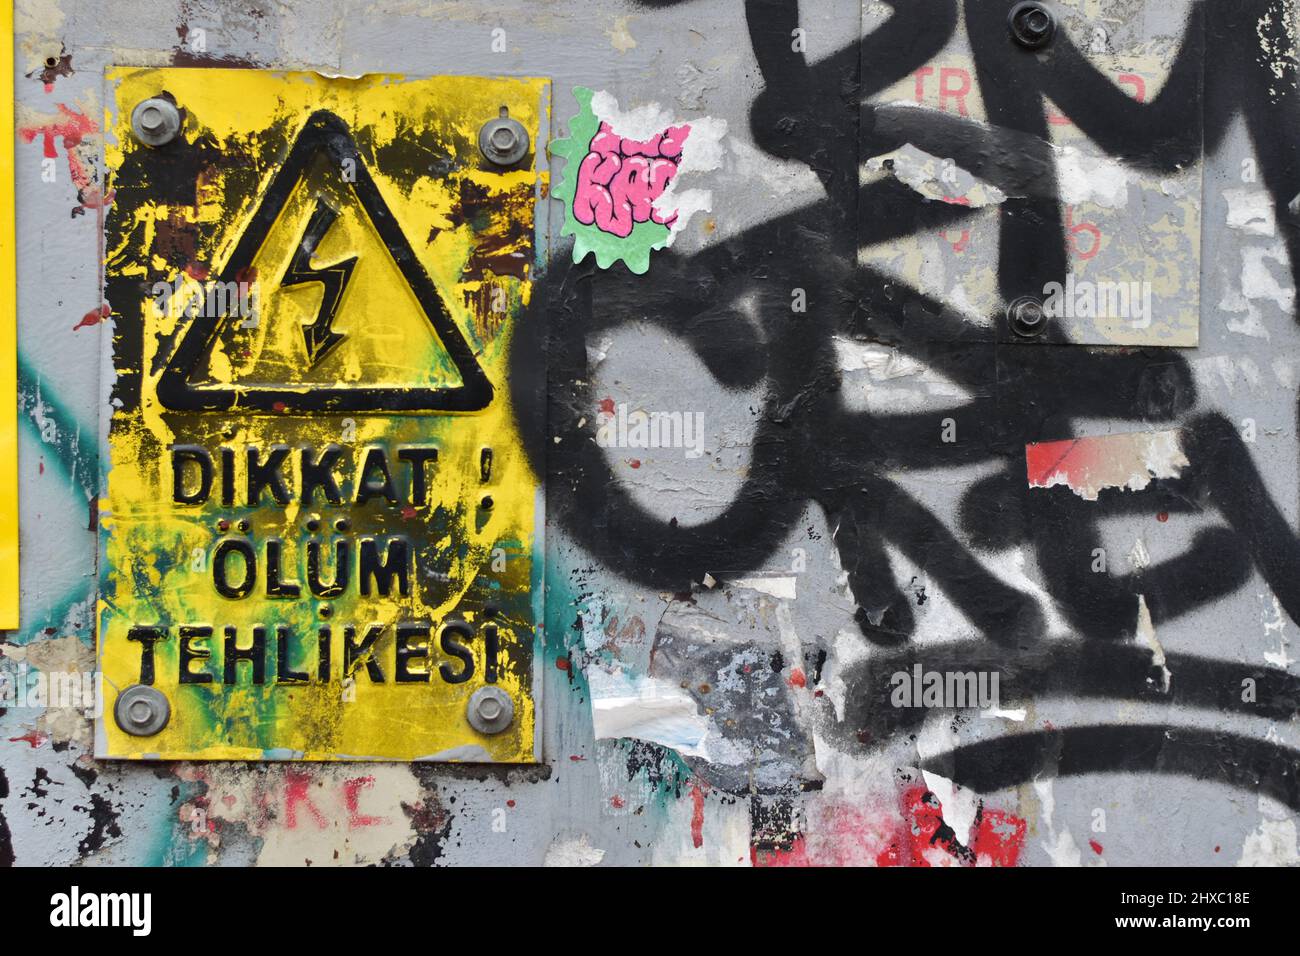 Street Art - Graffiti and Warning Signs Stock Photo